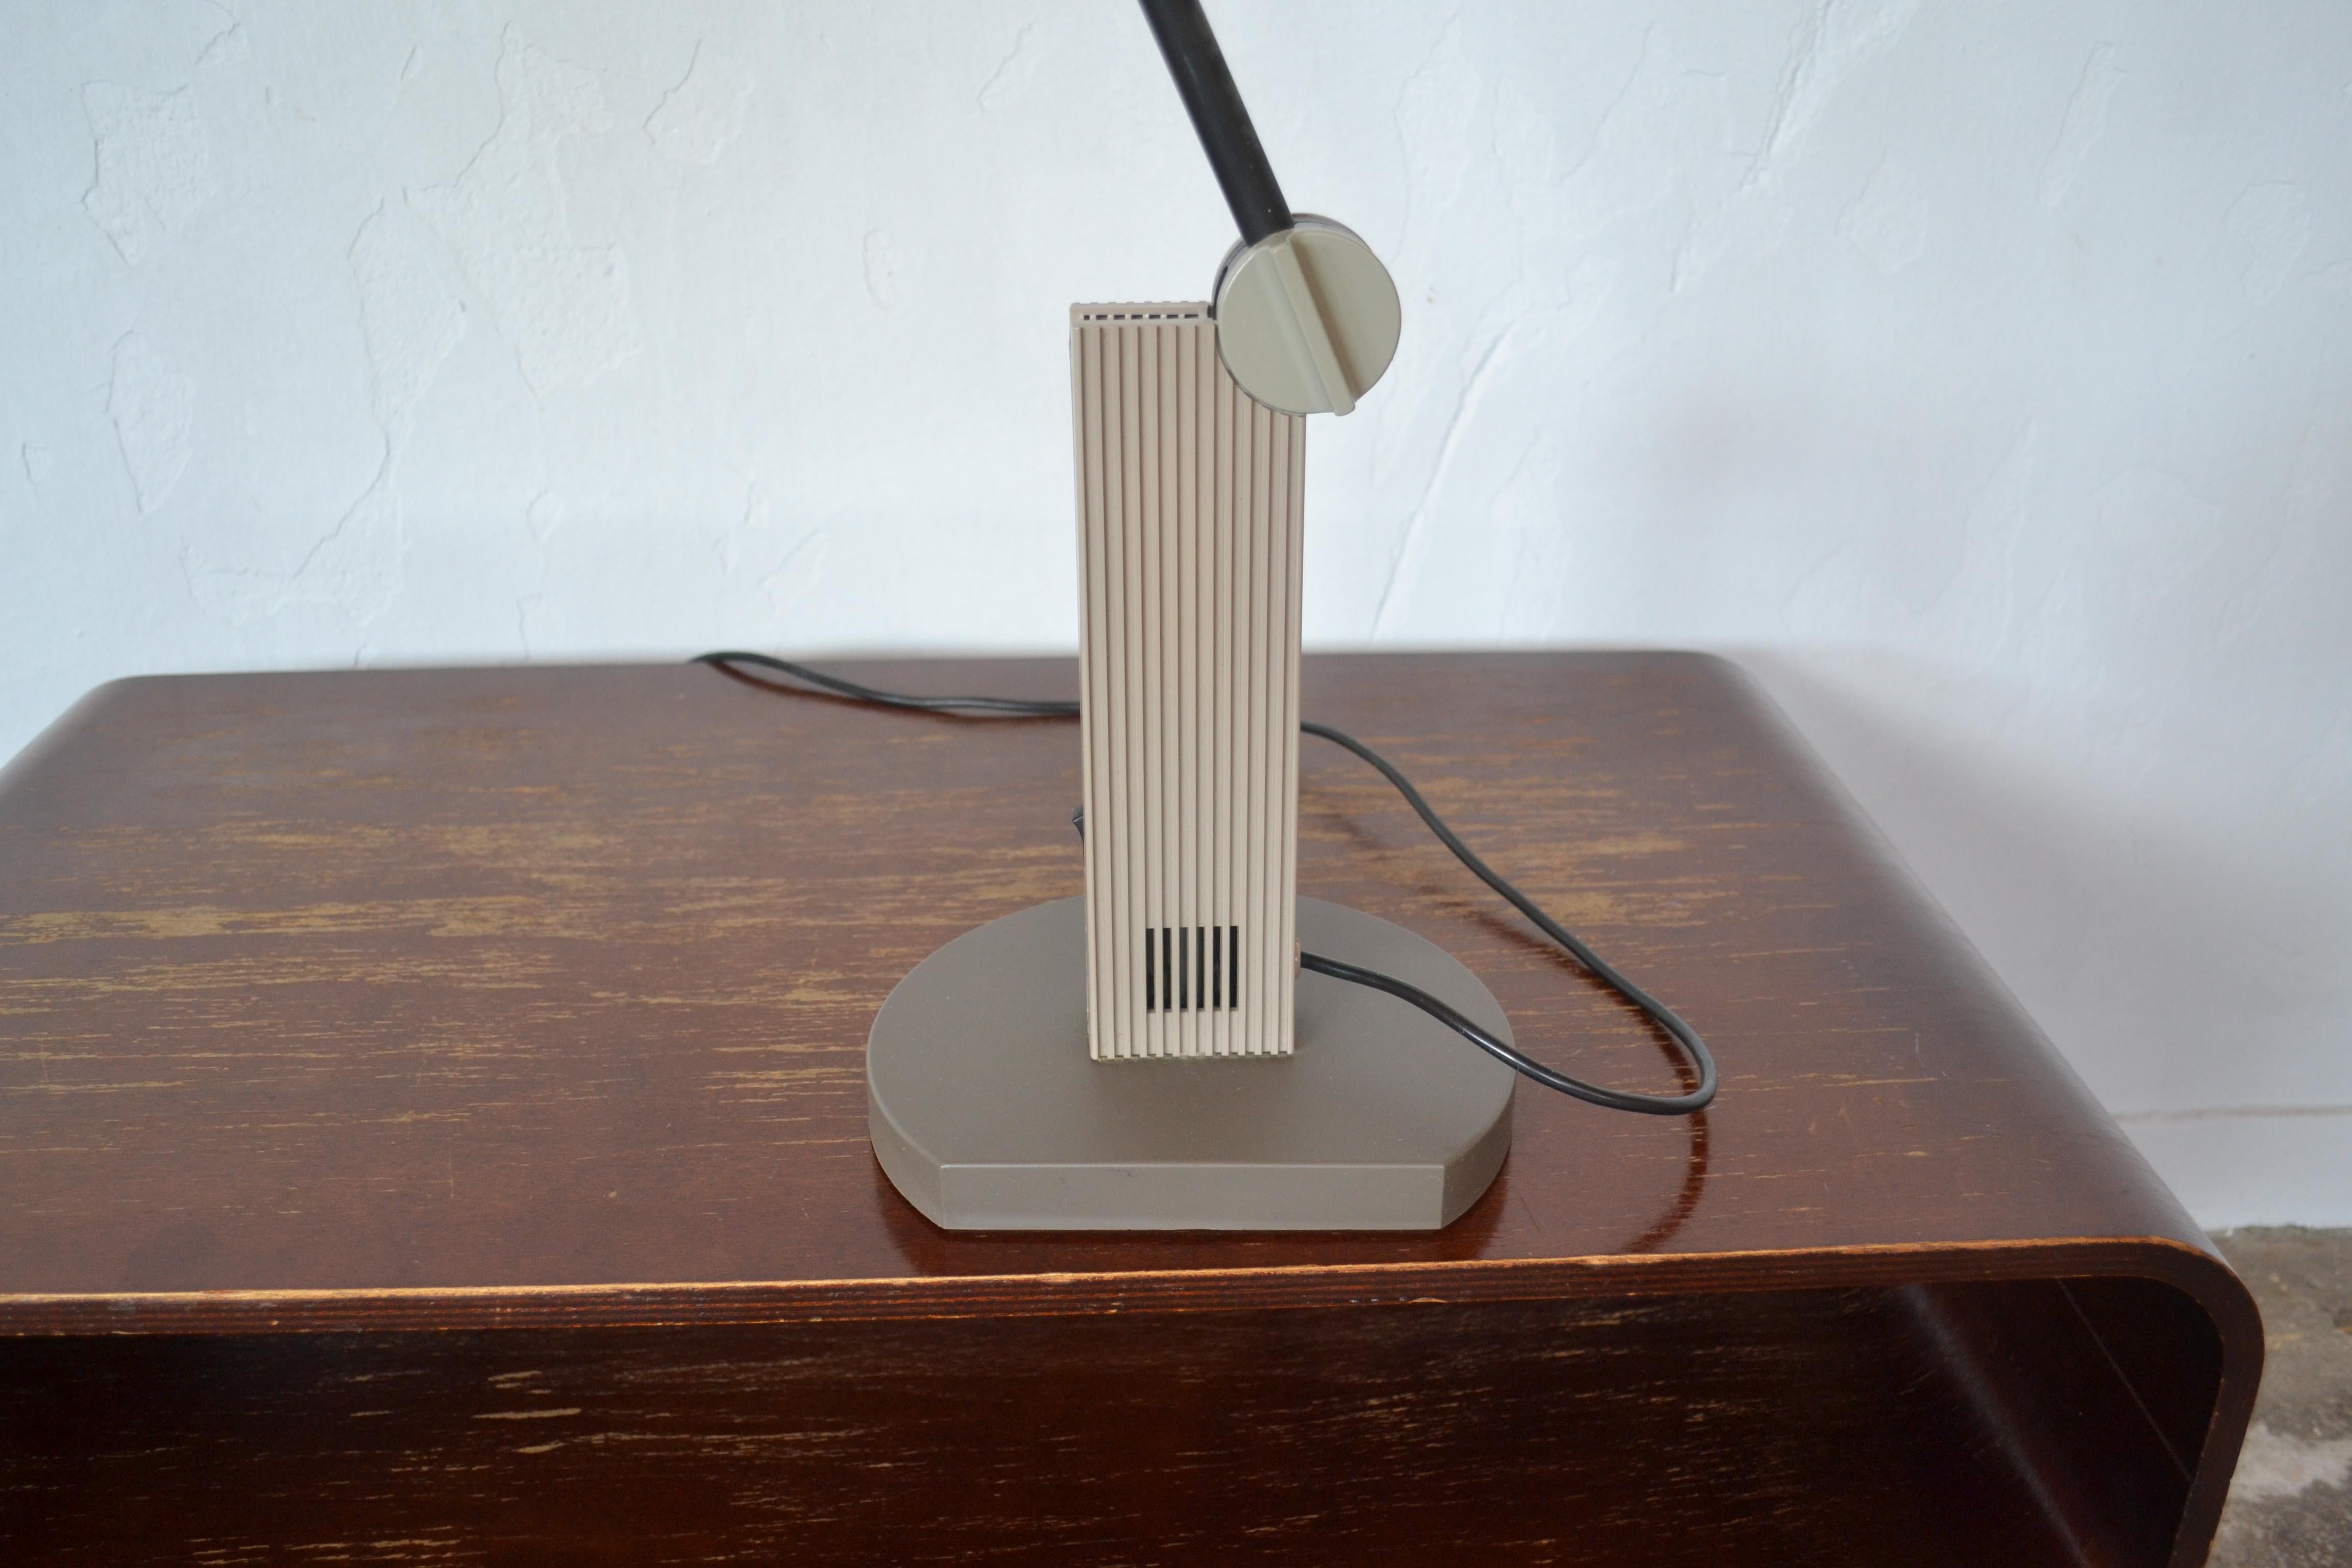 This Artemide model Alistro lamp was designed by Ernesto Gismondi in 1983.